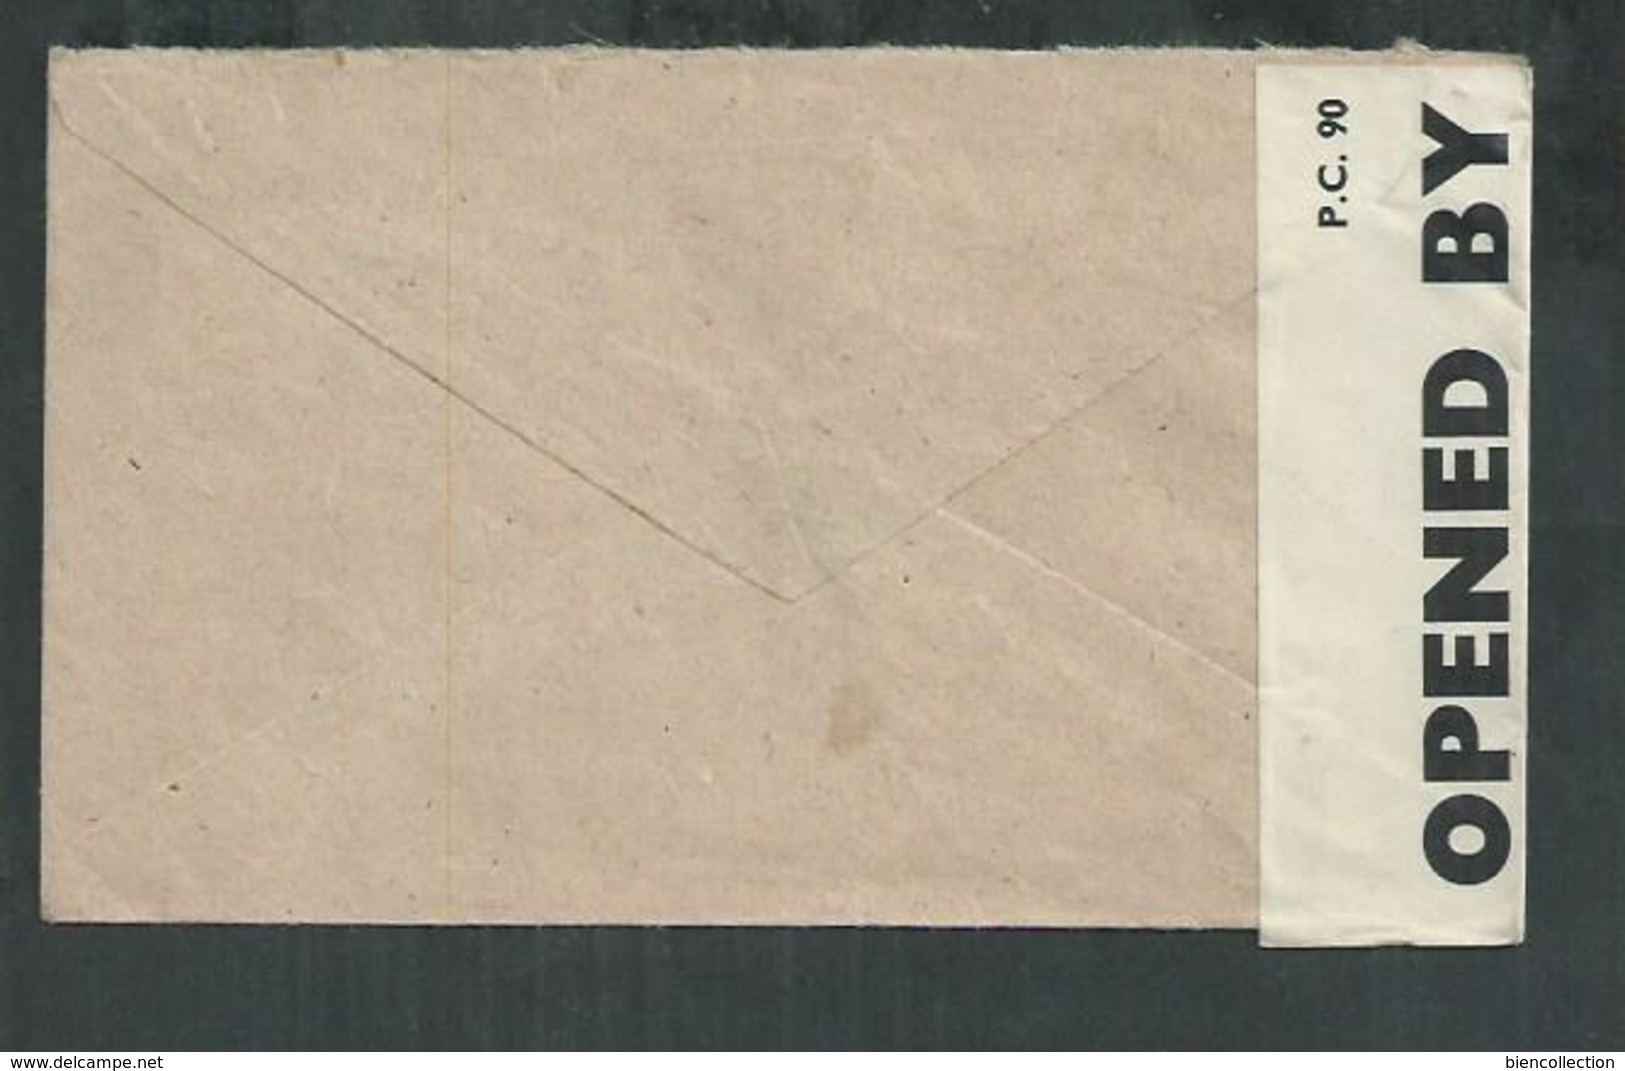 Irlande. Lettre Pour Londres Avec Censure EXAMINER 1901 From Baile Atha Cliath - Storia Postale